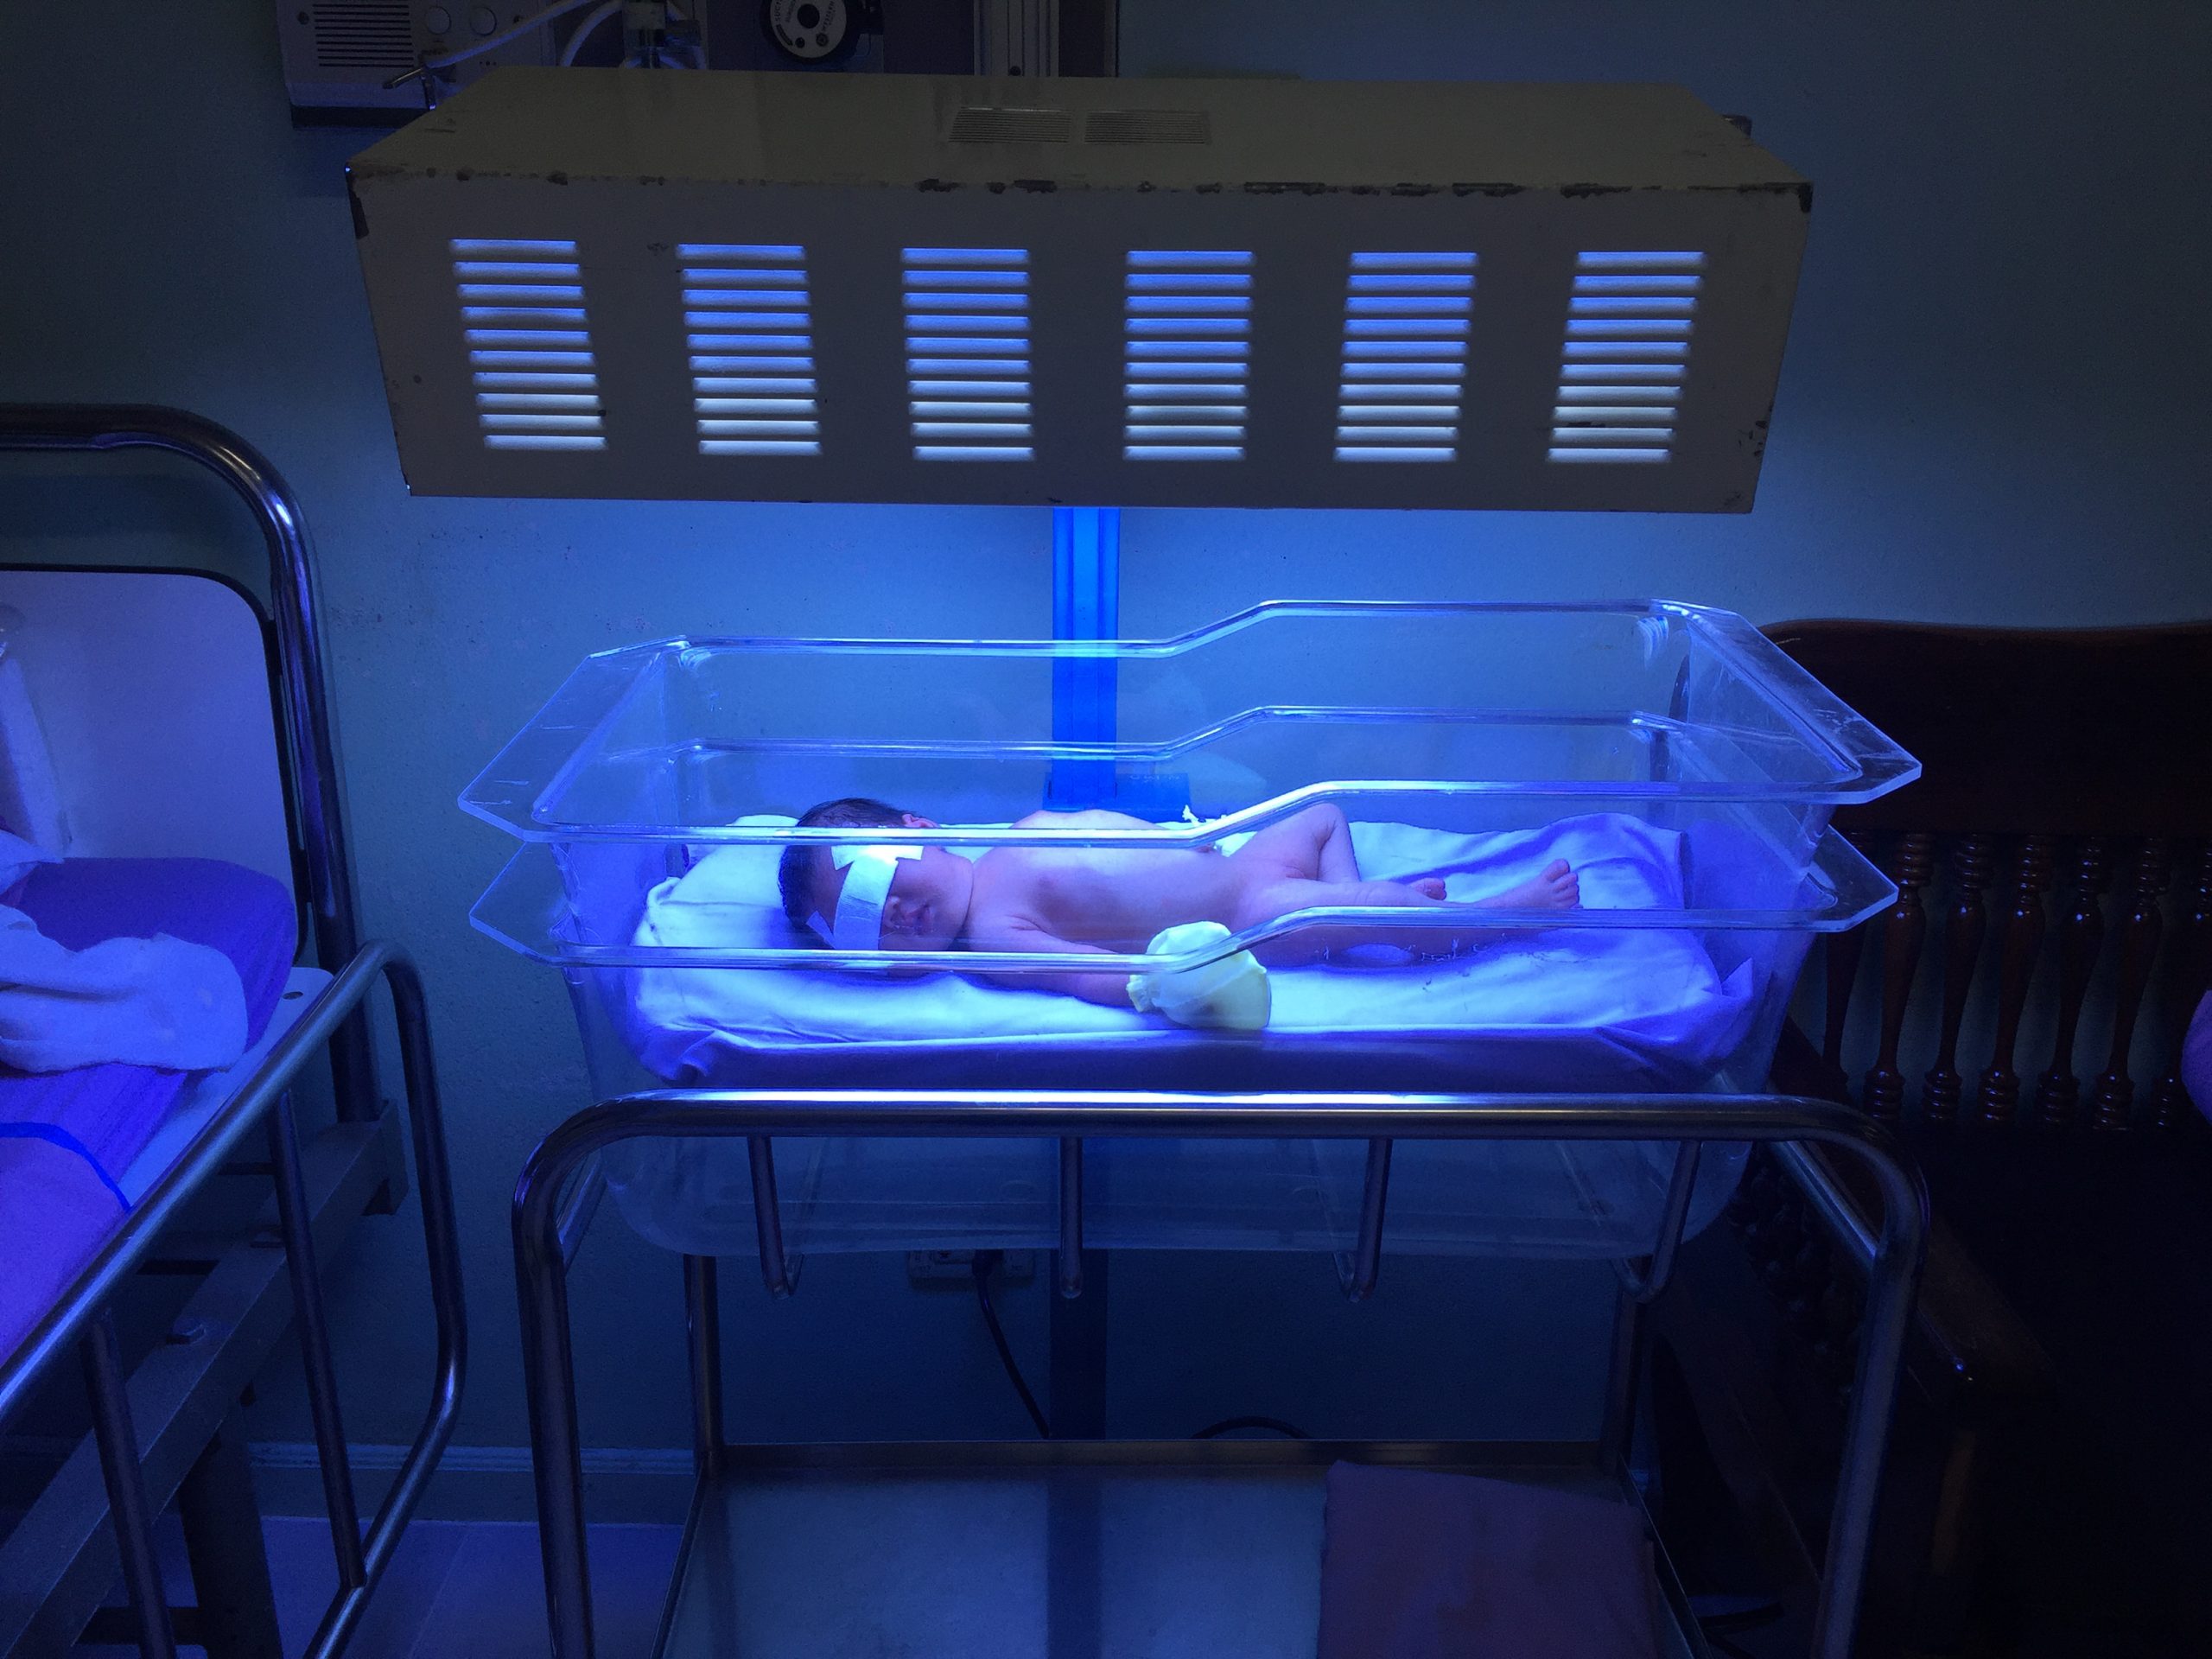 motherhood-hospital-to-provide-virtual-neonatal-intensive-care-system-across-india